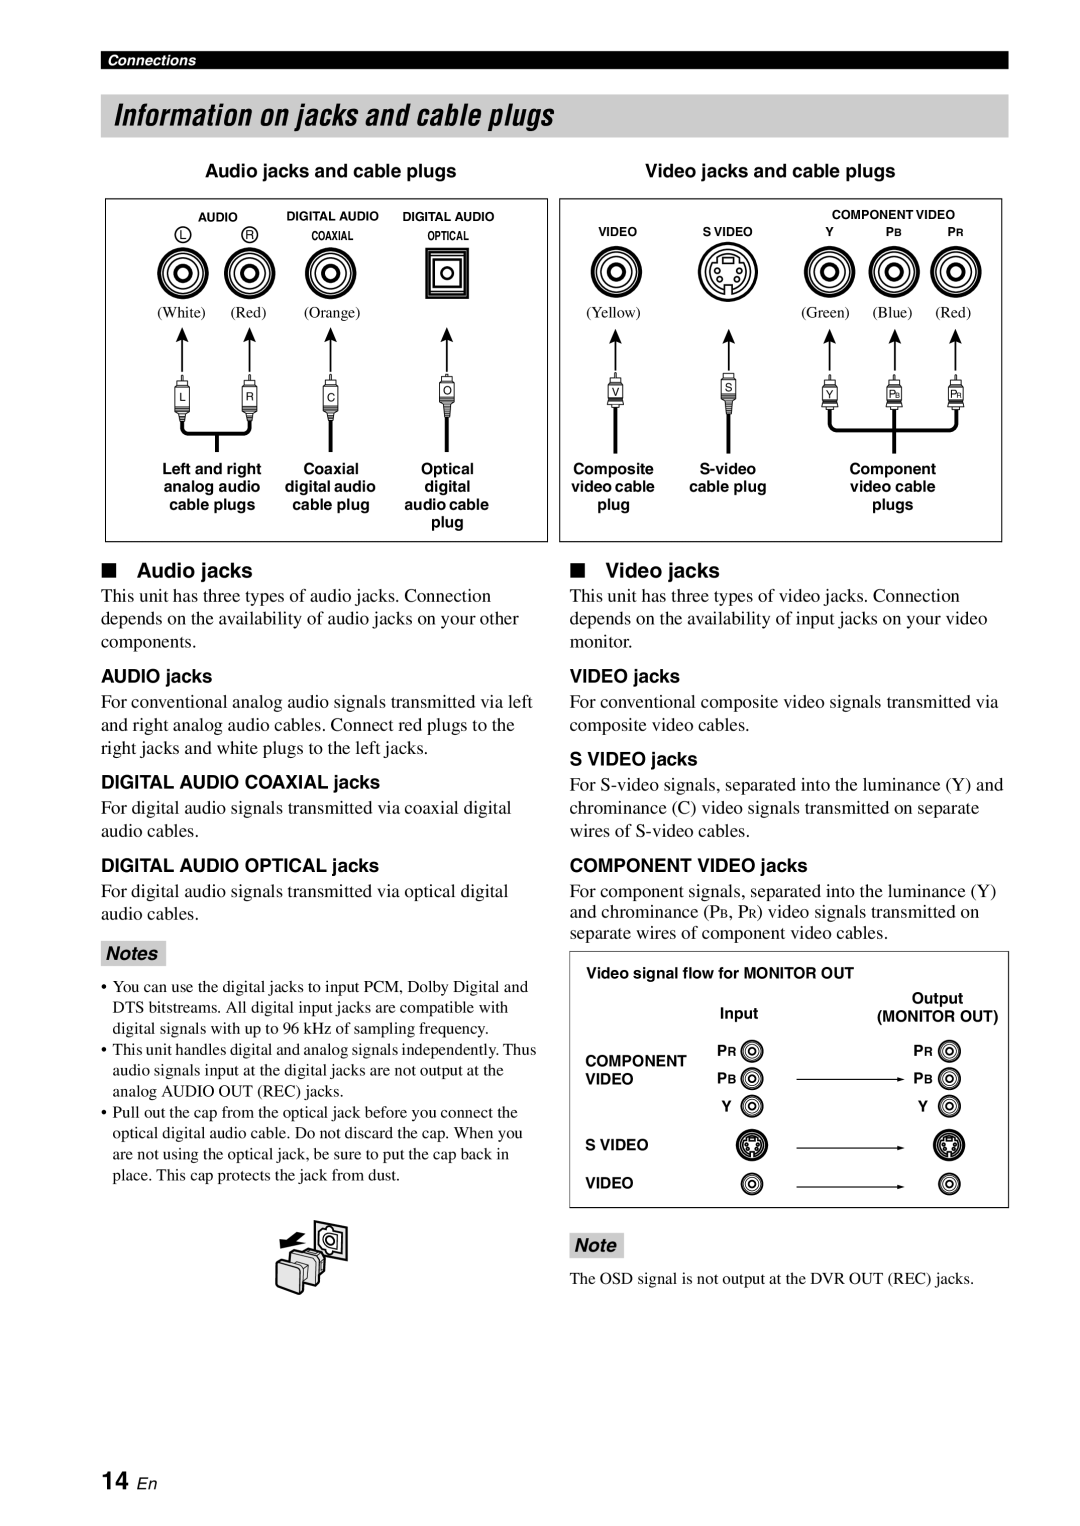 Yamaha RX-V561 owner manual Information on jacks and cable plugs, 14 En, Audio jacks, Video jacks, Notes 